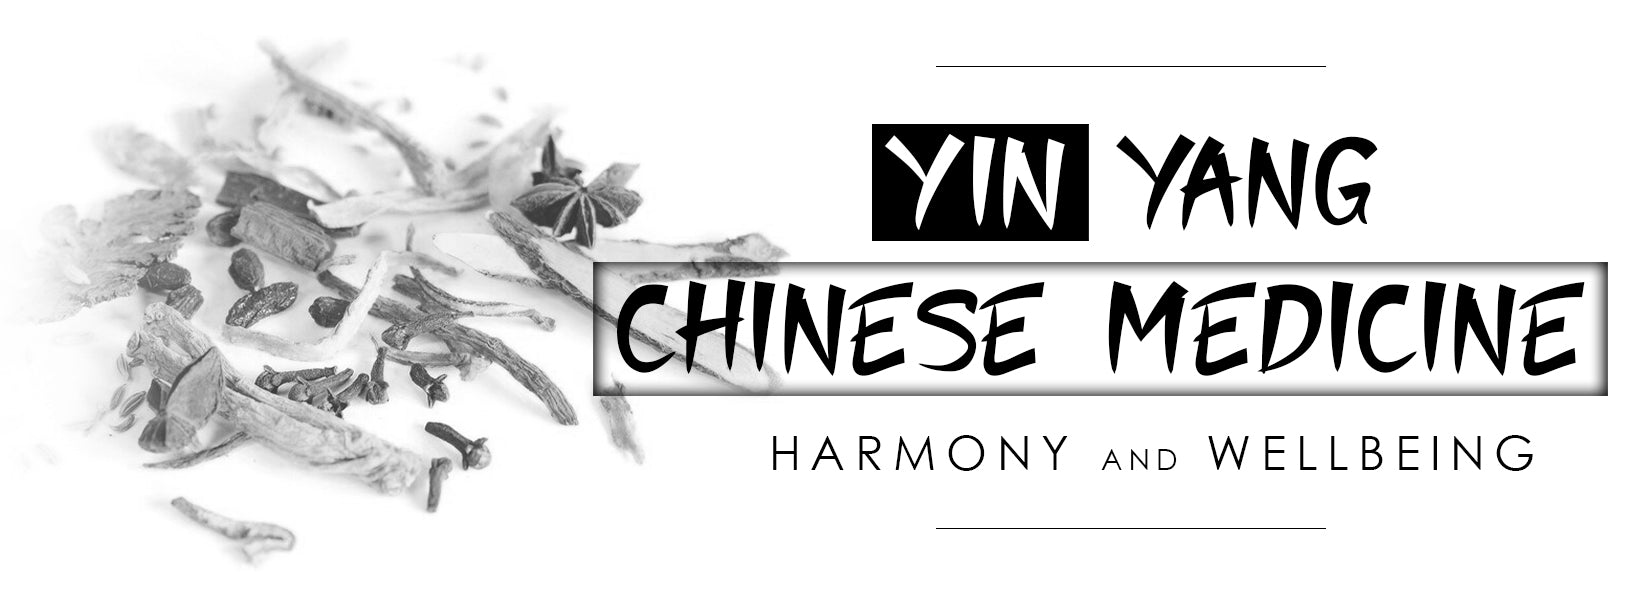 yin yang chinese medicine